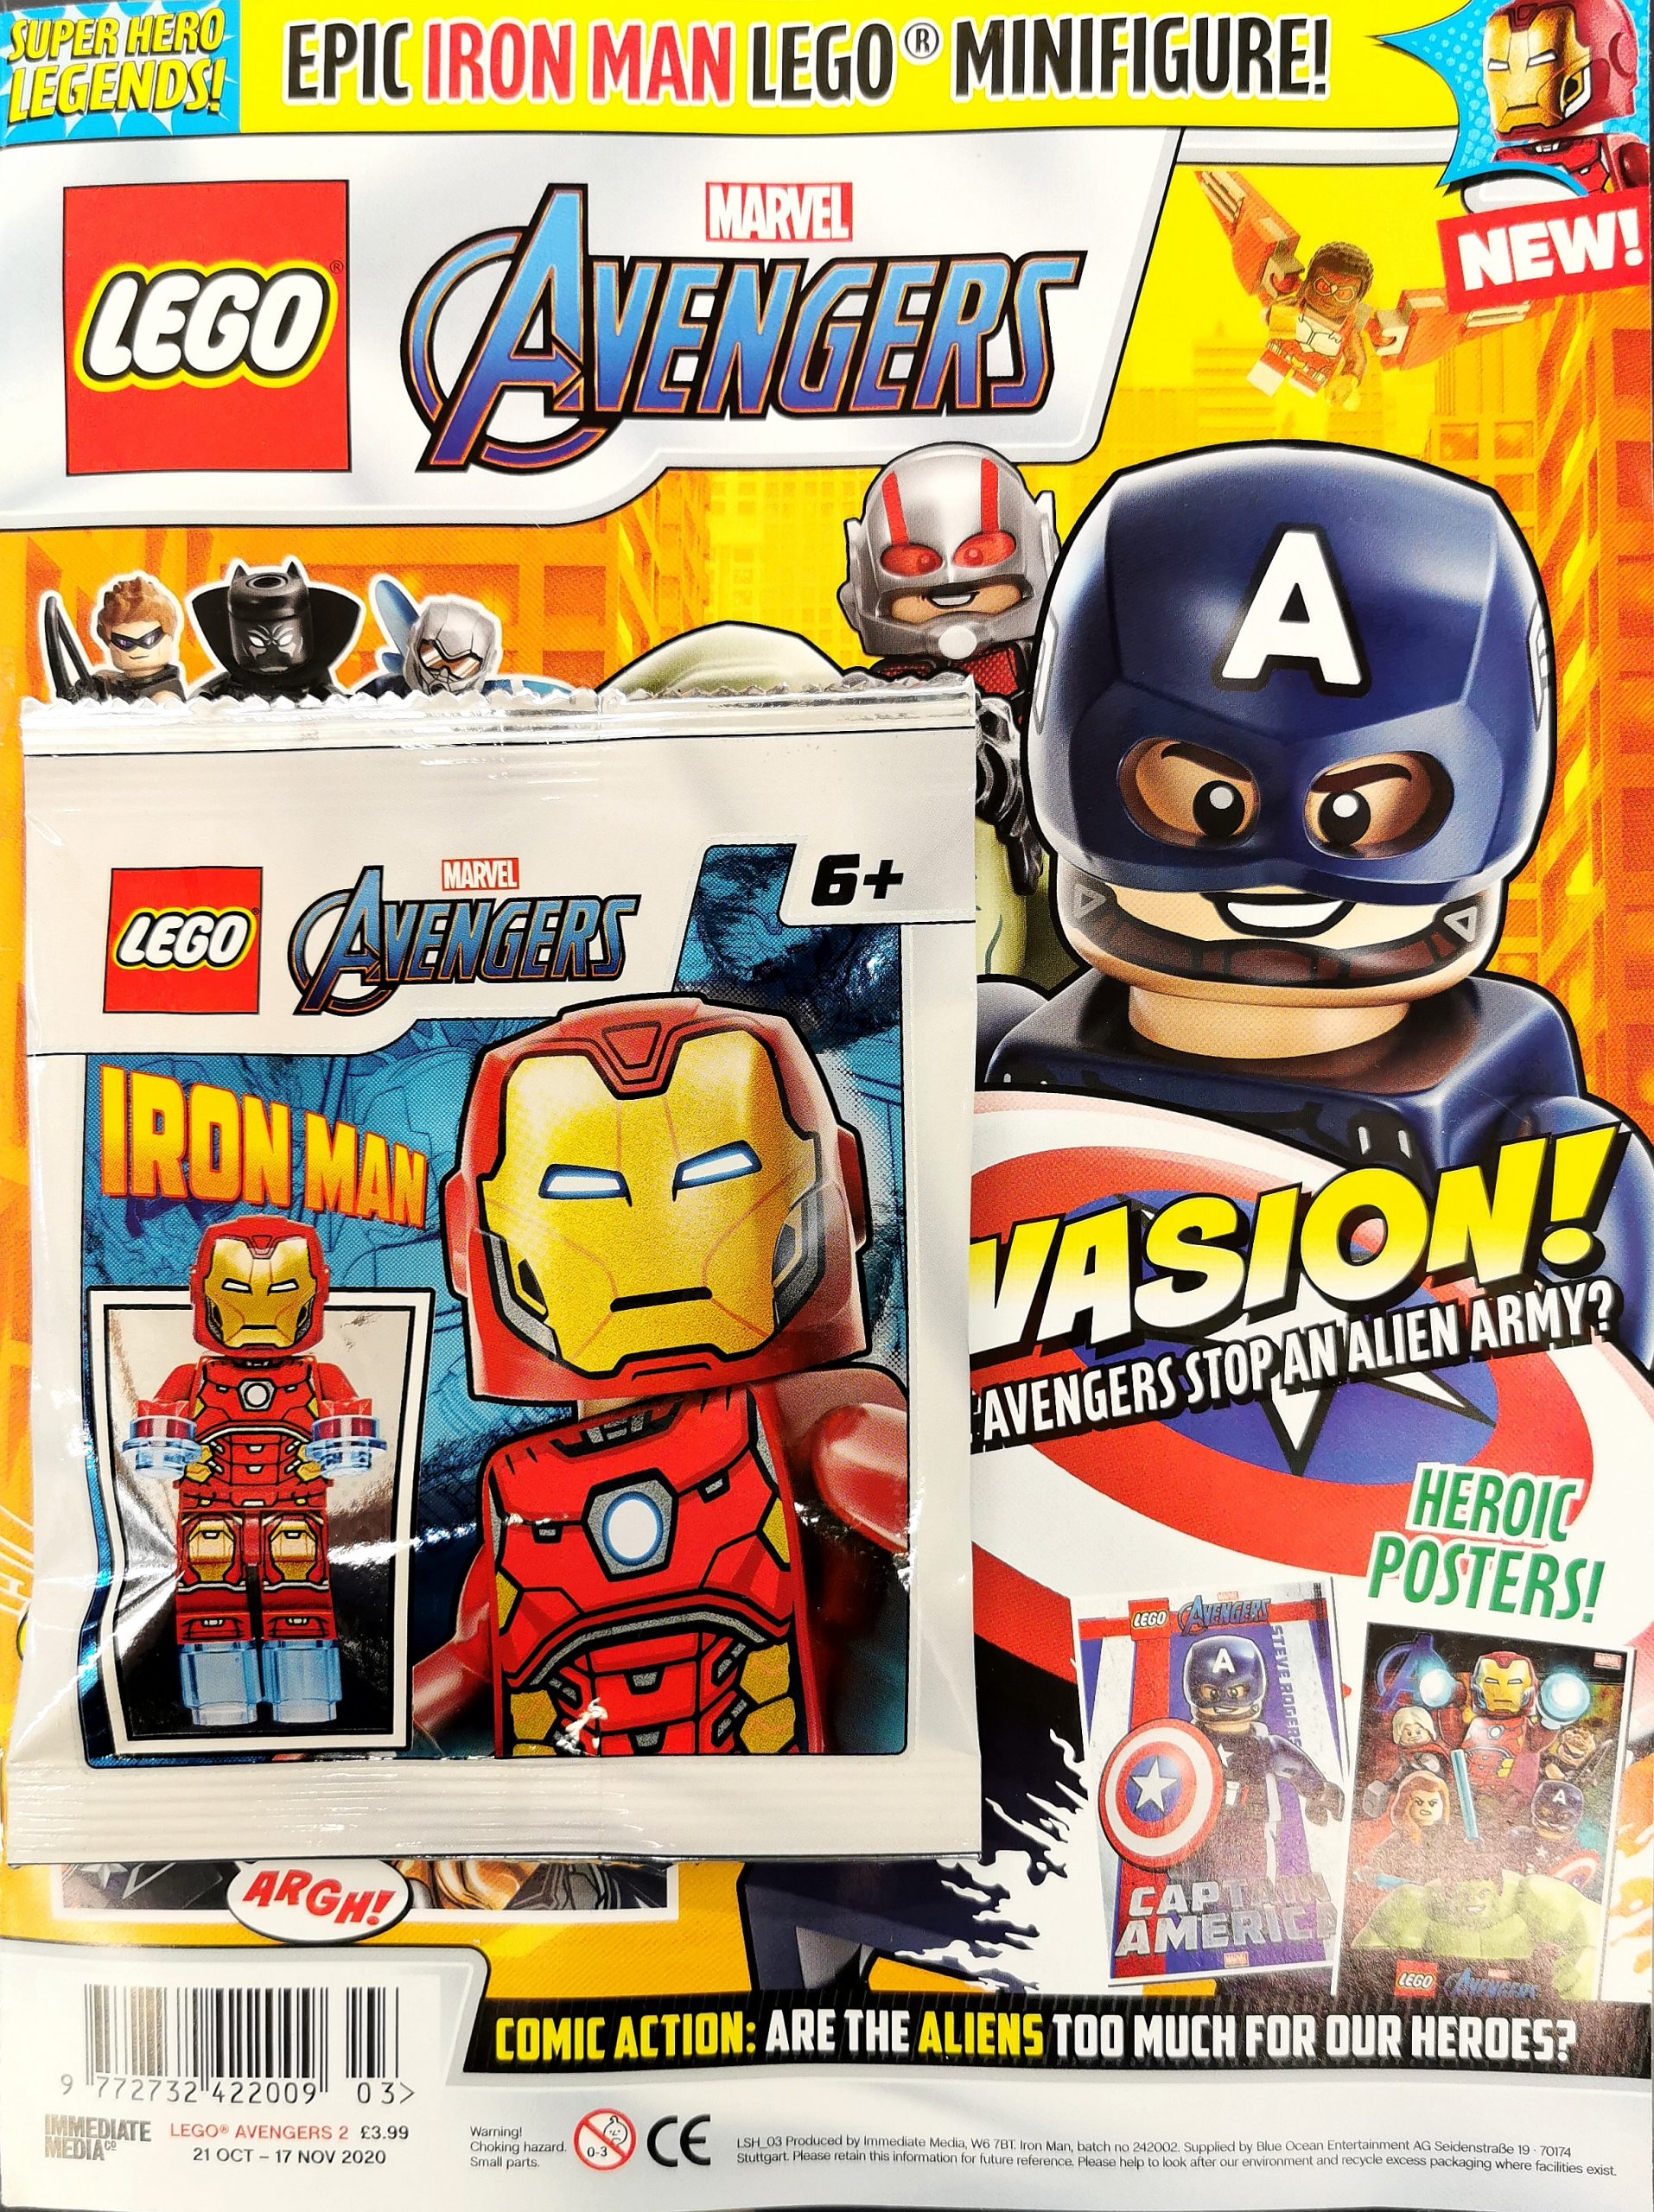 LEGO 242003 Superhero Legends Magazine Avengers 3 2020 Captain Marvel Minifigure for sale online 